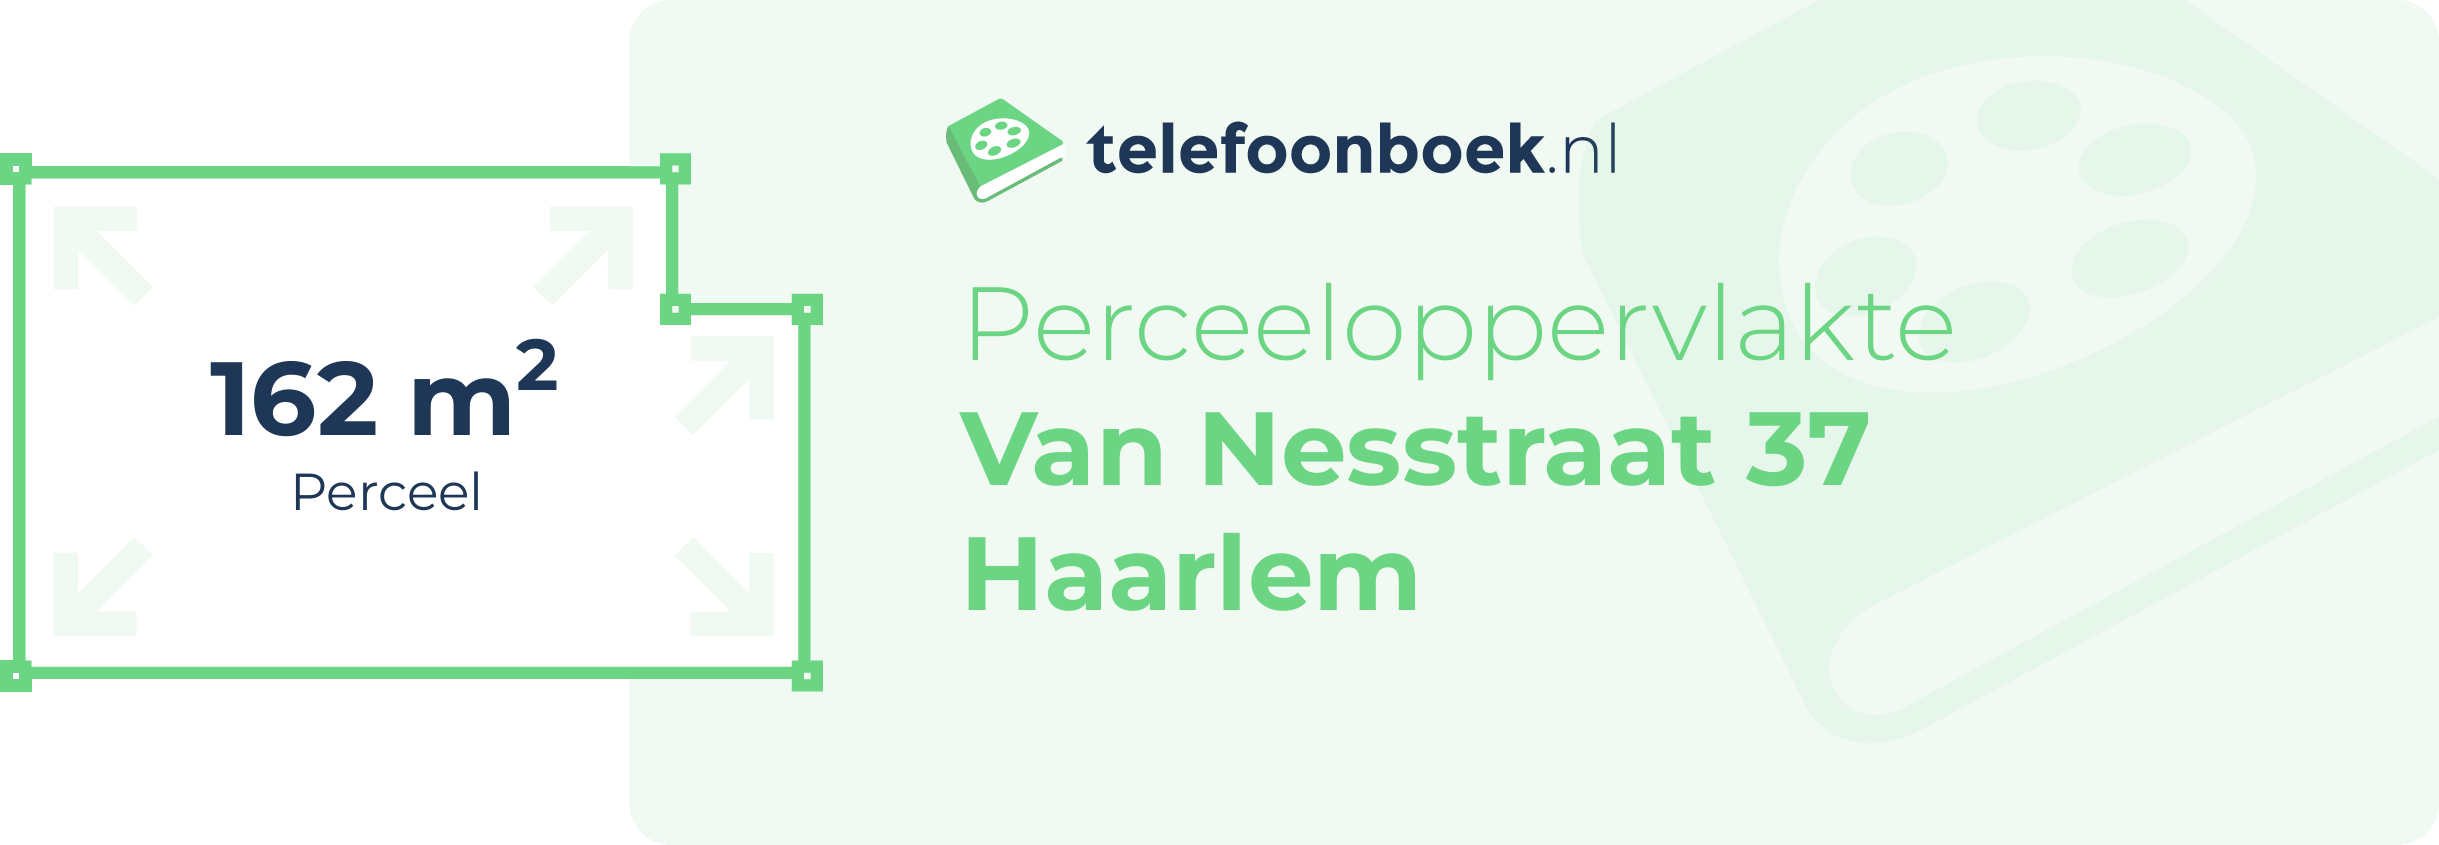 Perceeloppervlakte Van Nesstraat 37 Haarlem